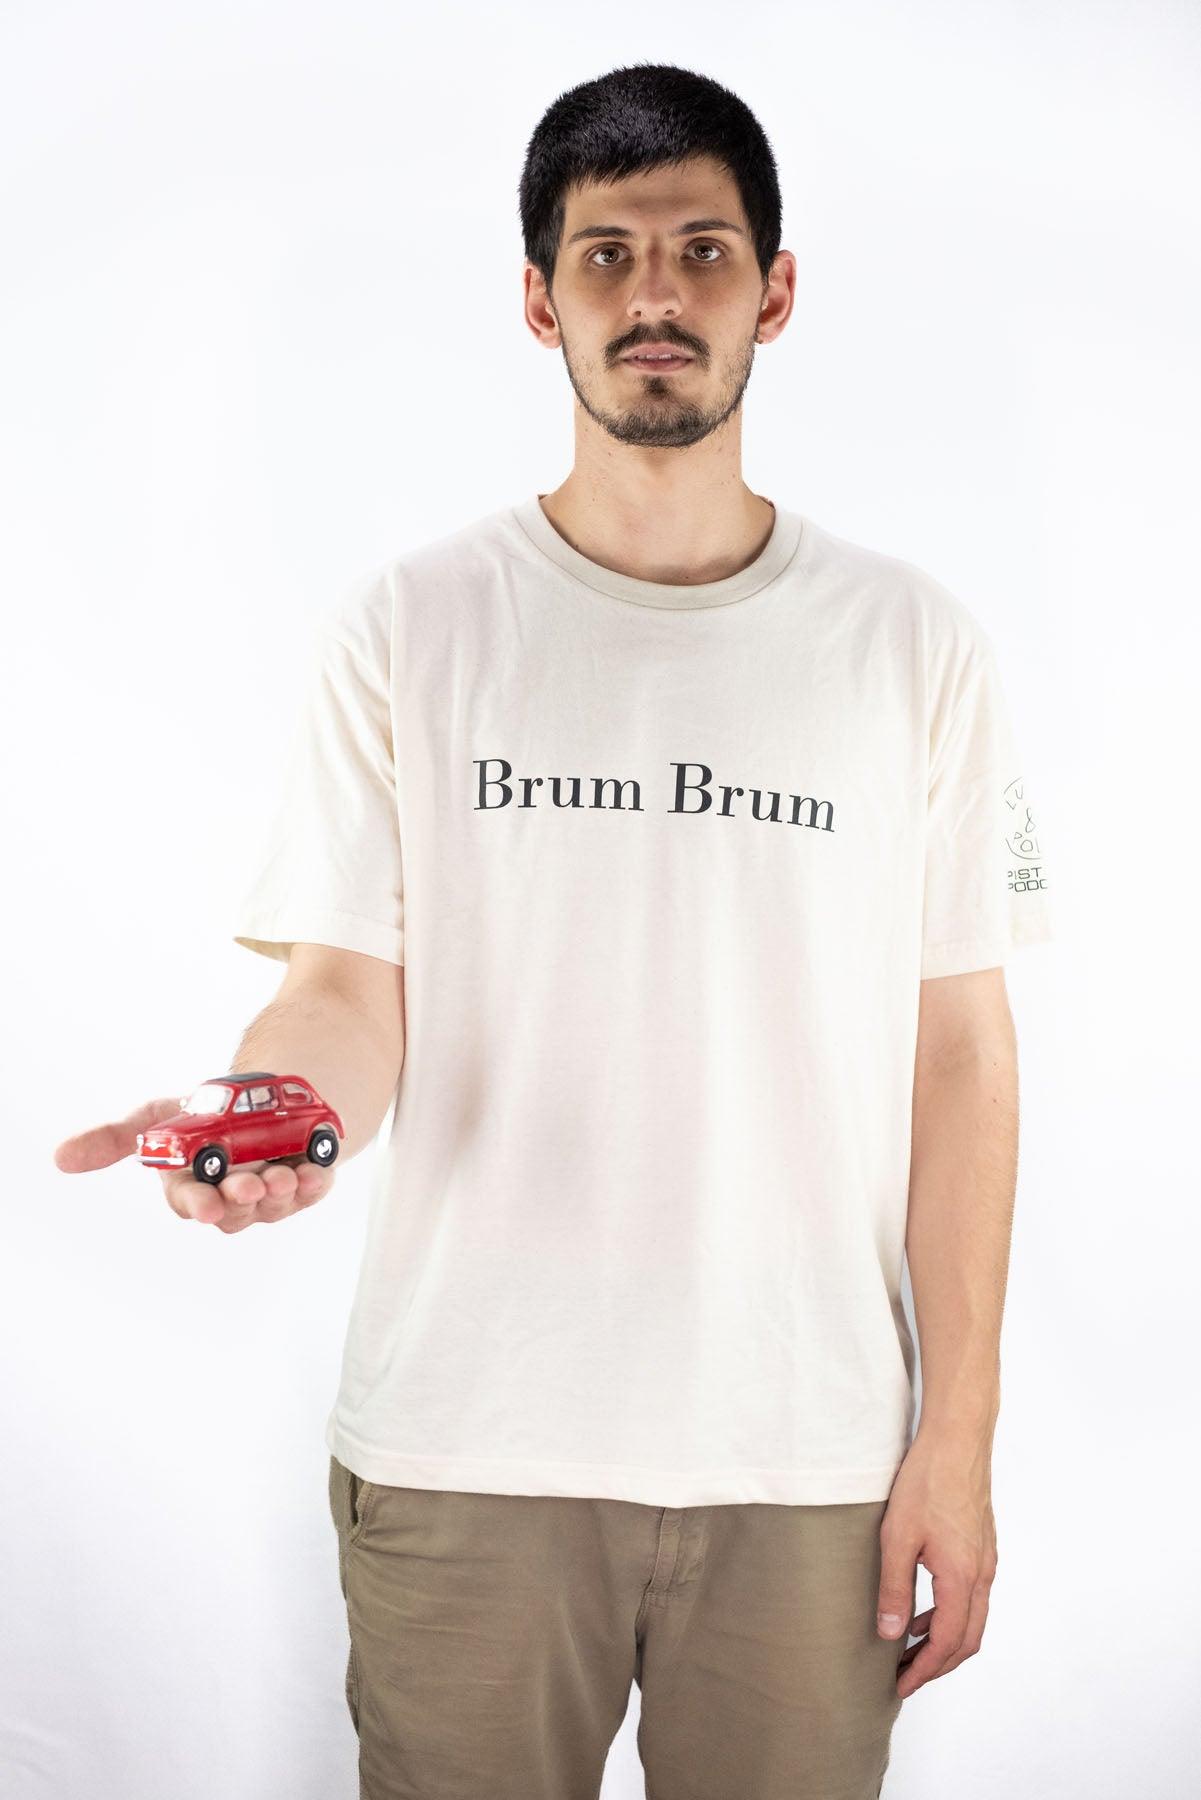 Brum Brum (feat. Pistone Podcast) Luke & Pole